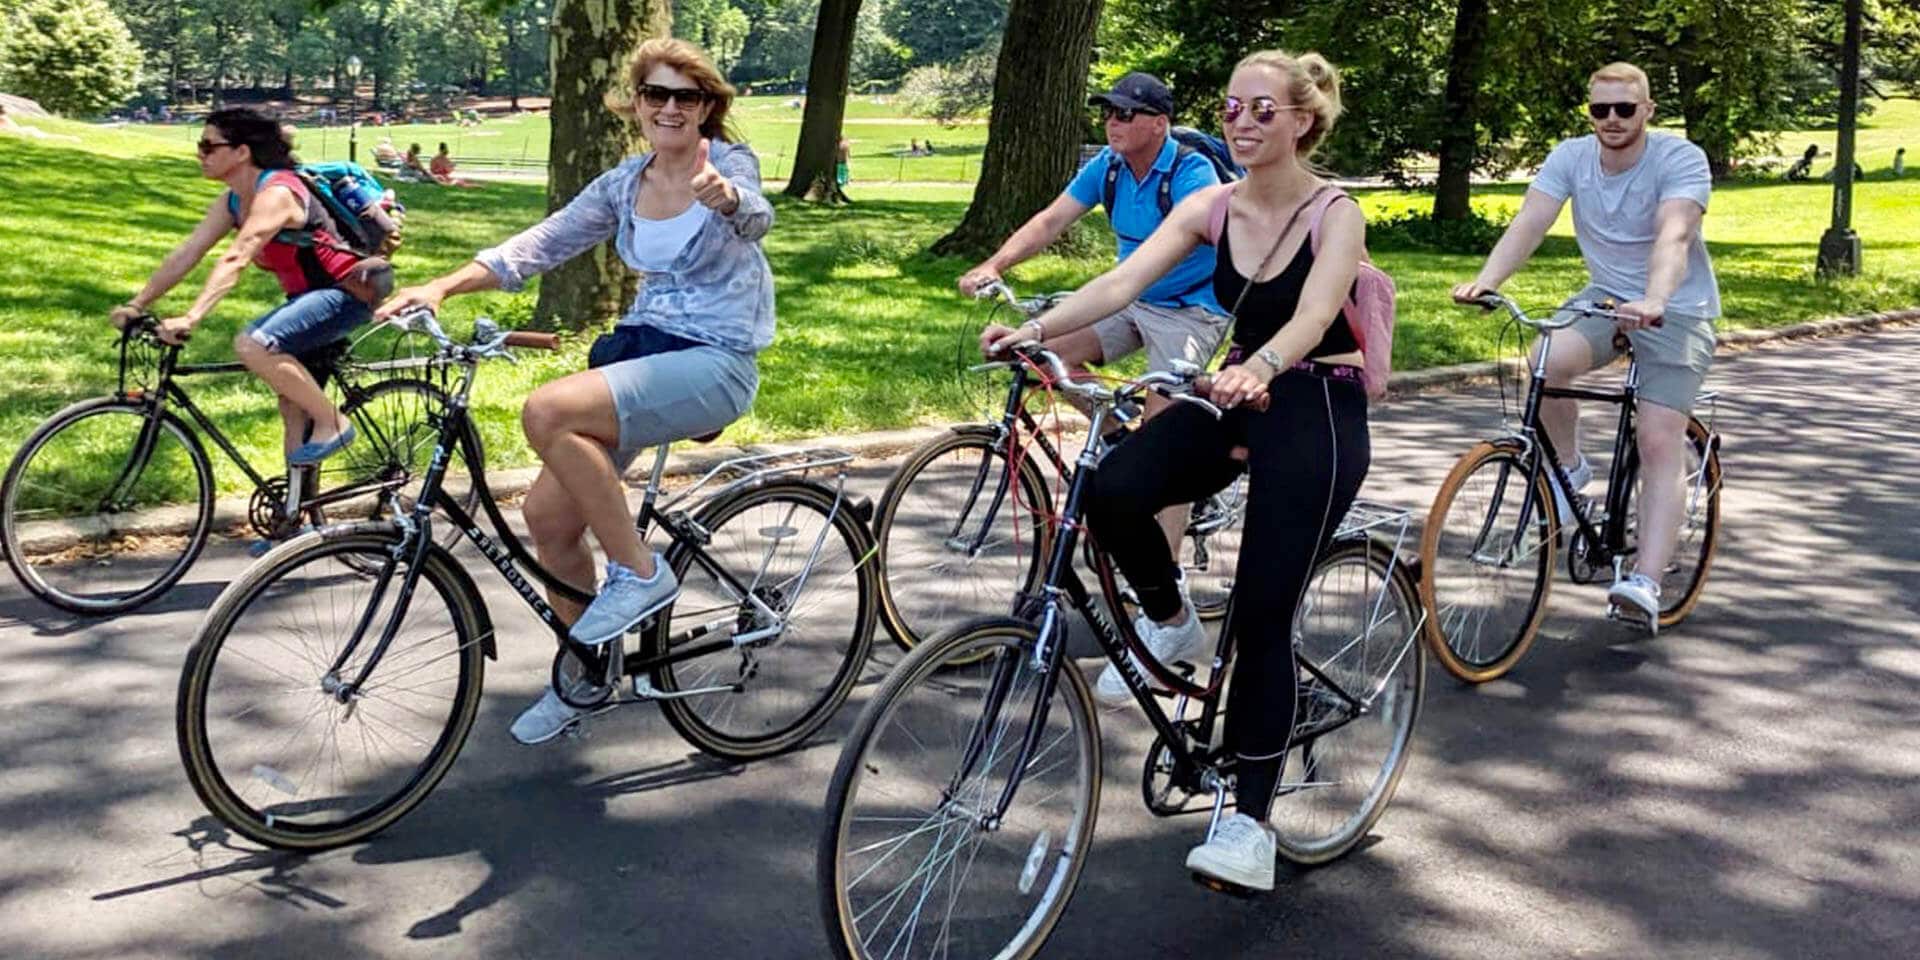 Spanish Bike Tour in Central Park